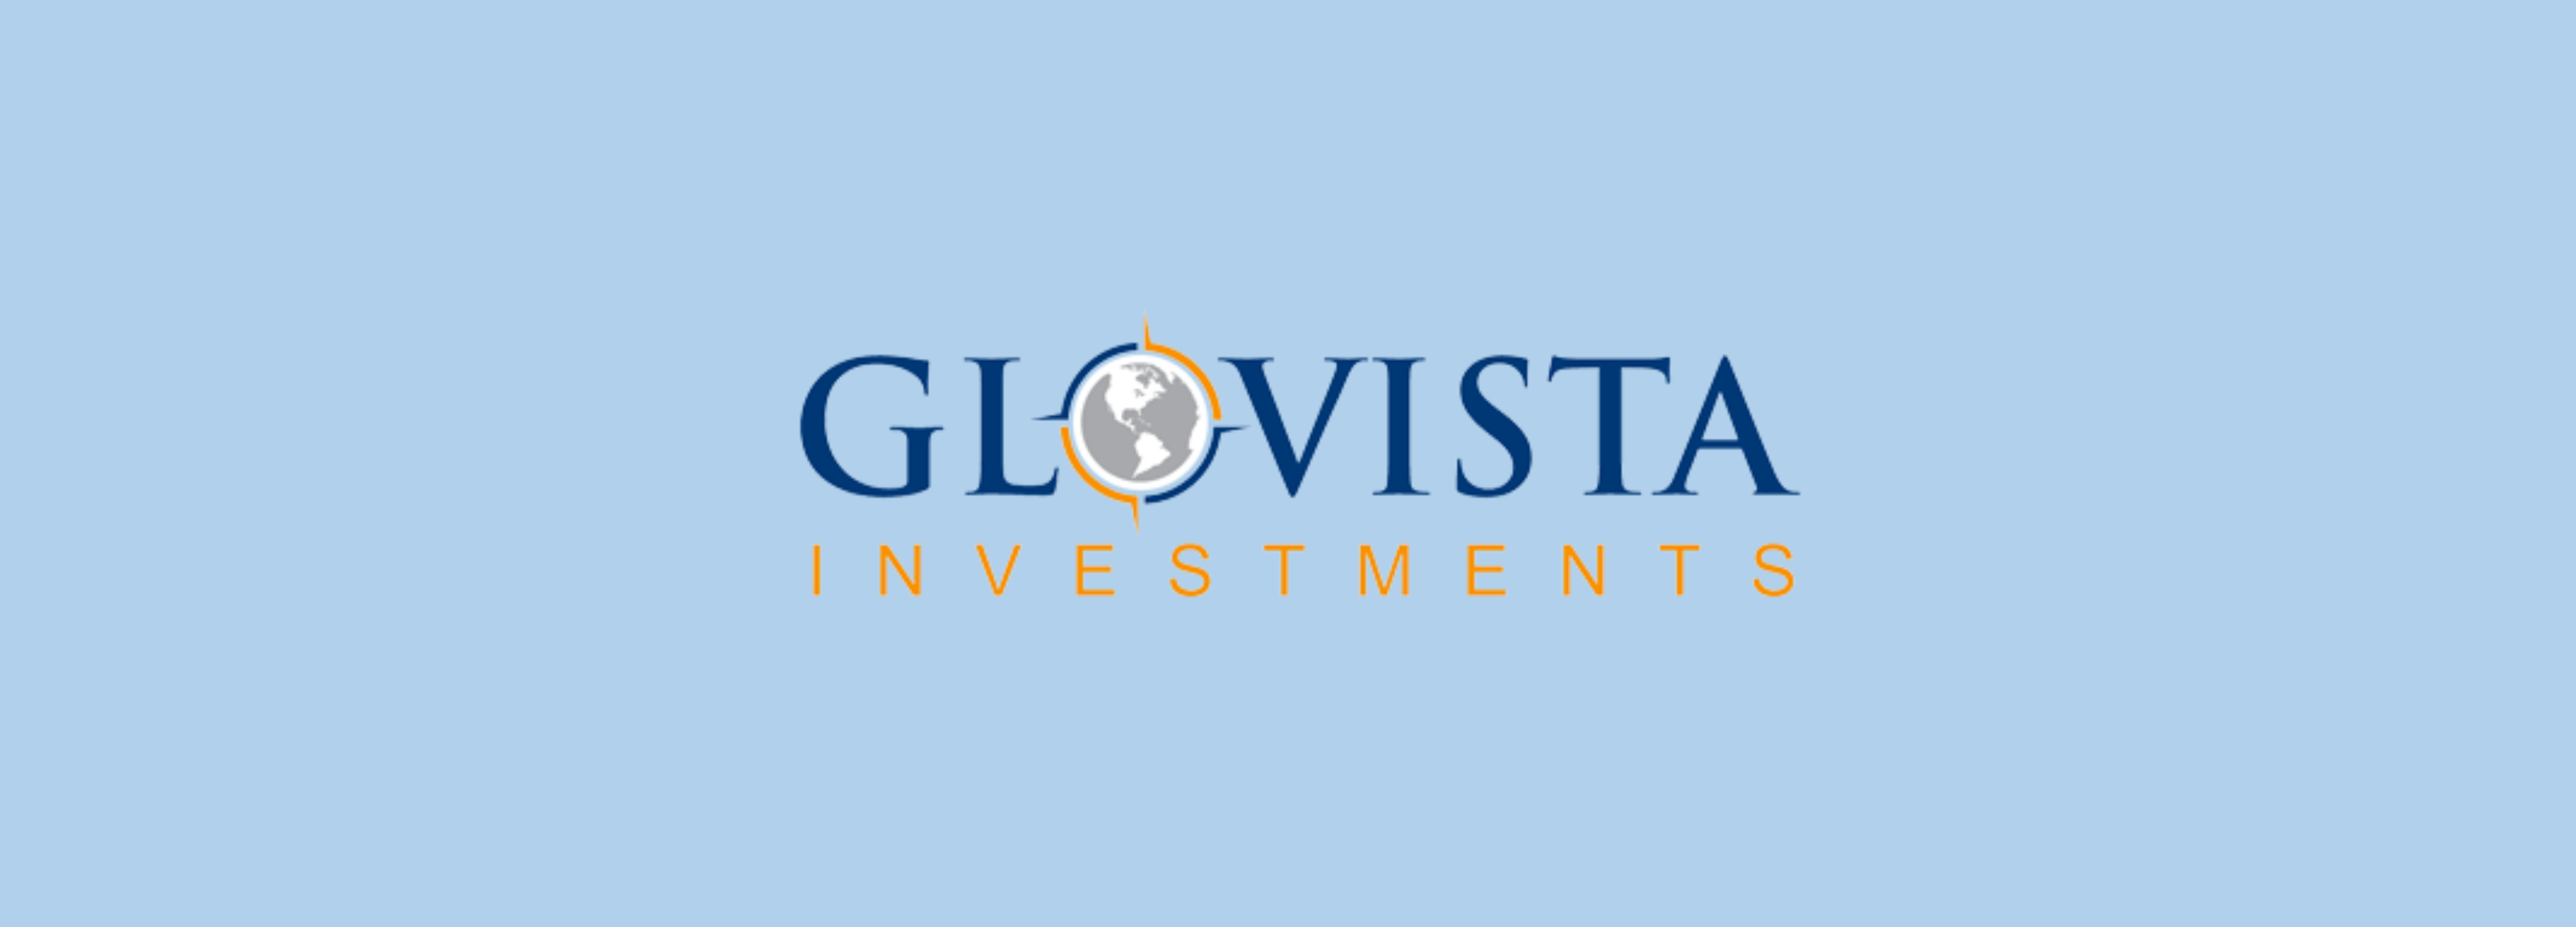 Emerging Markets Equity Manager Glovista Closes Doors